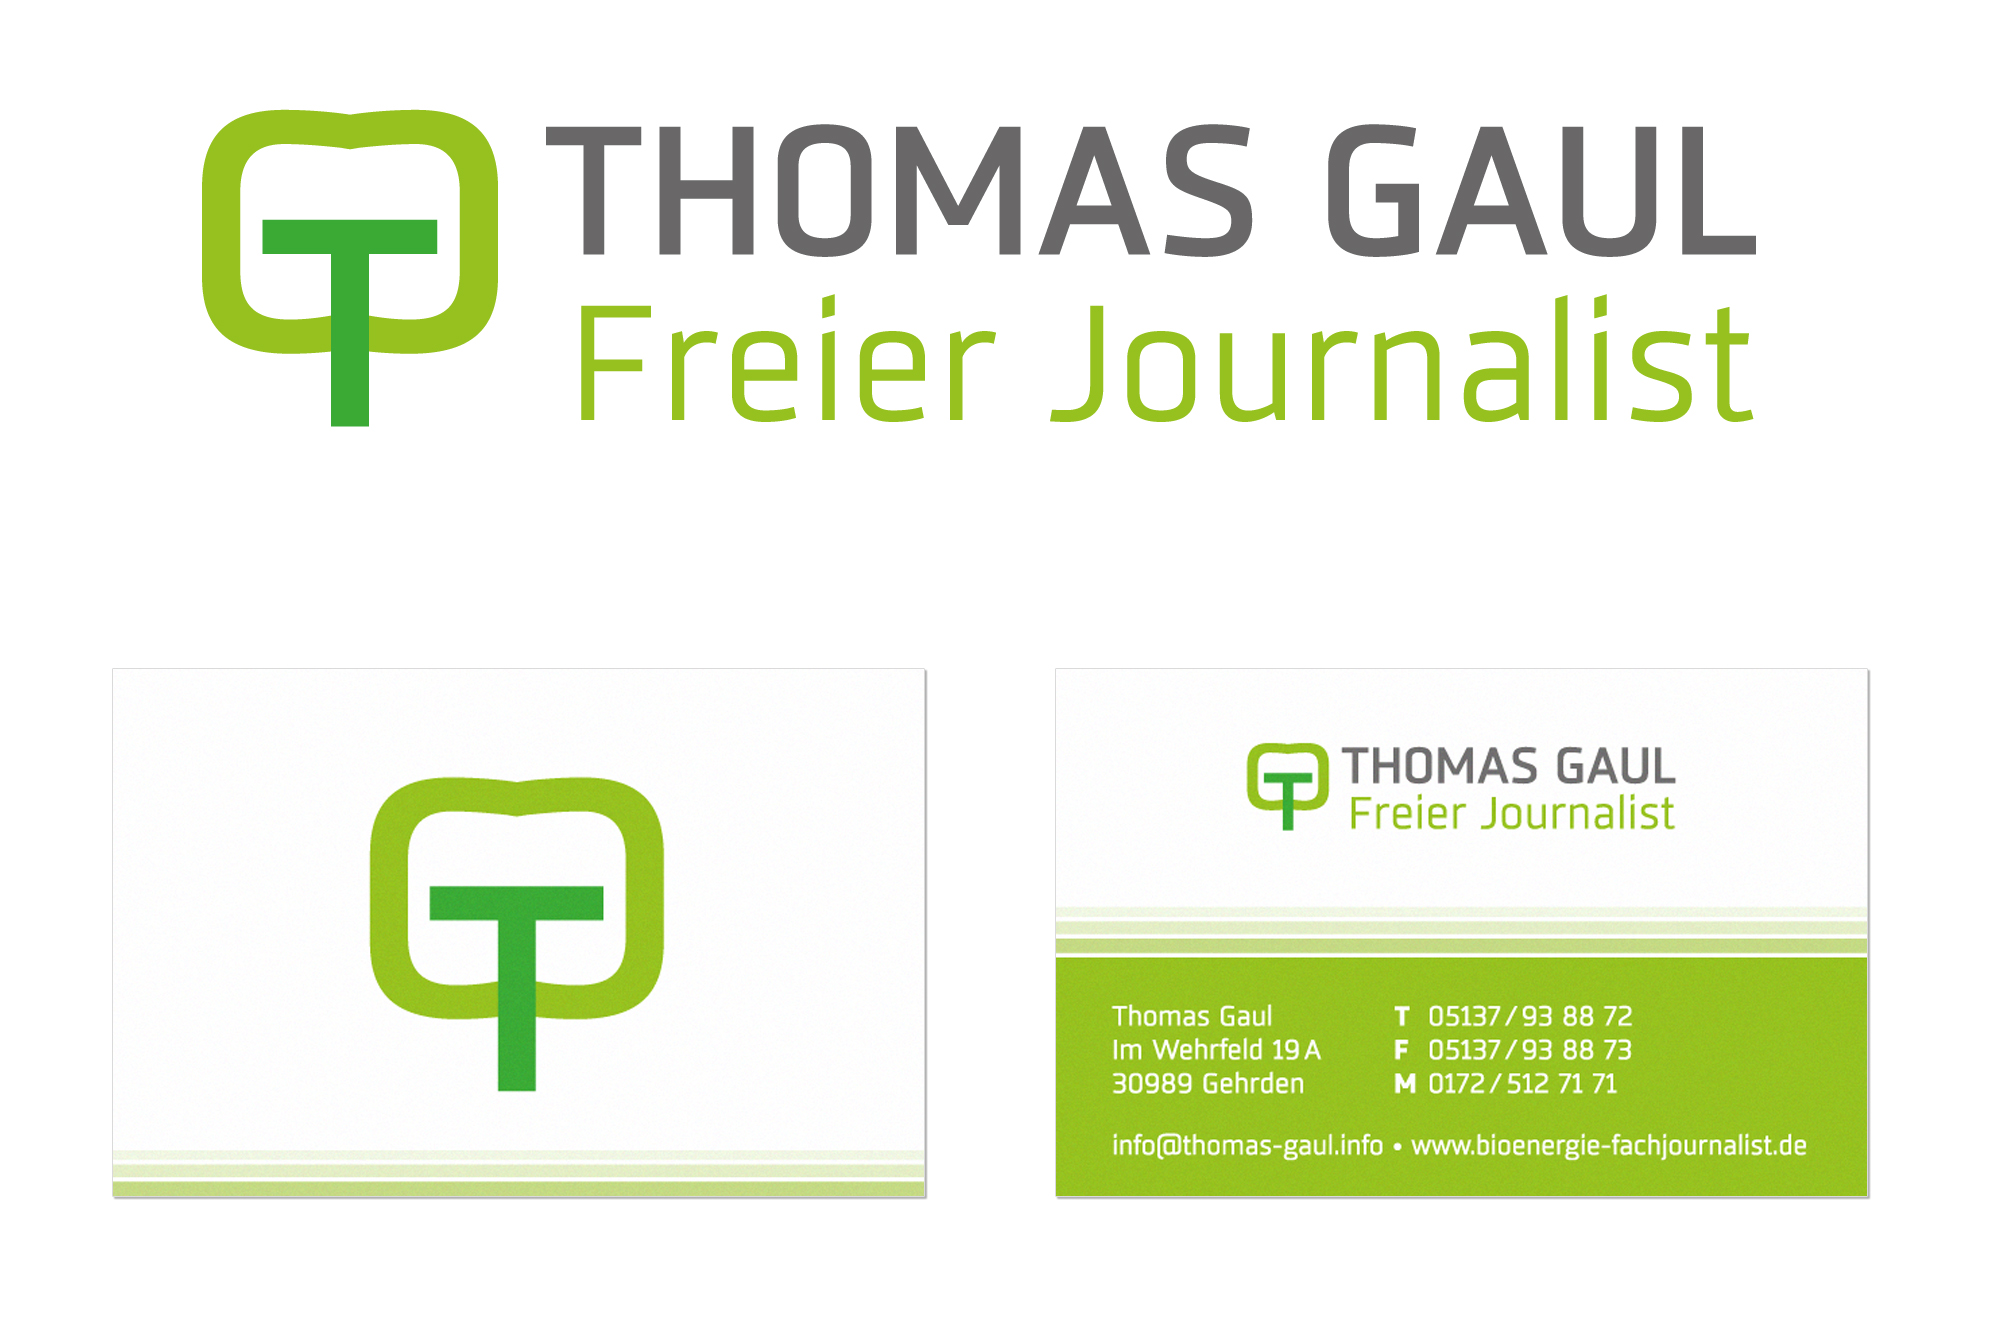 Thomas Gaul – freier Journalist